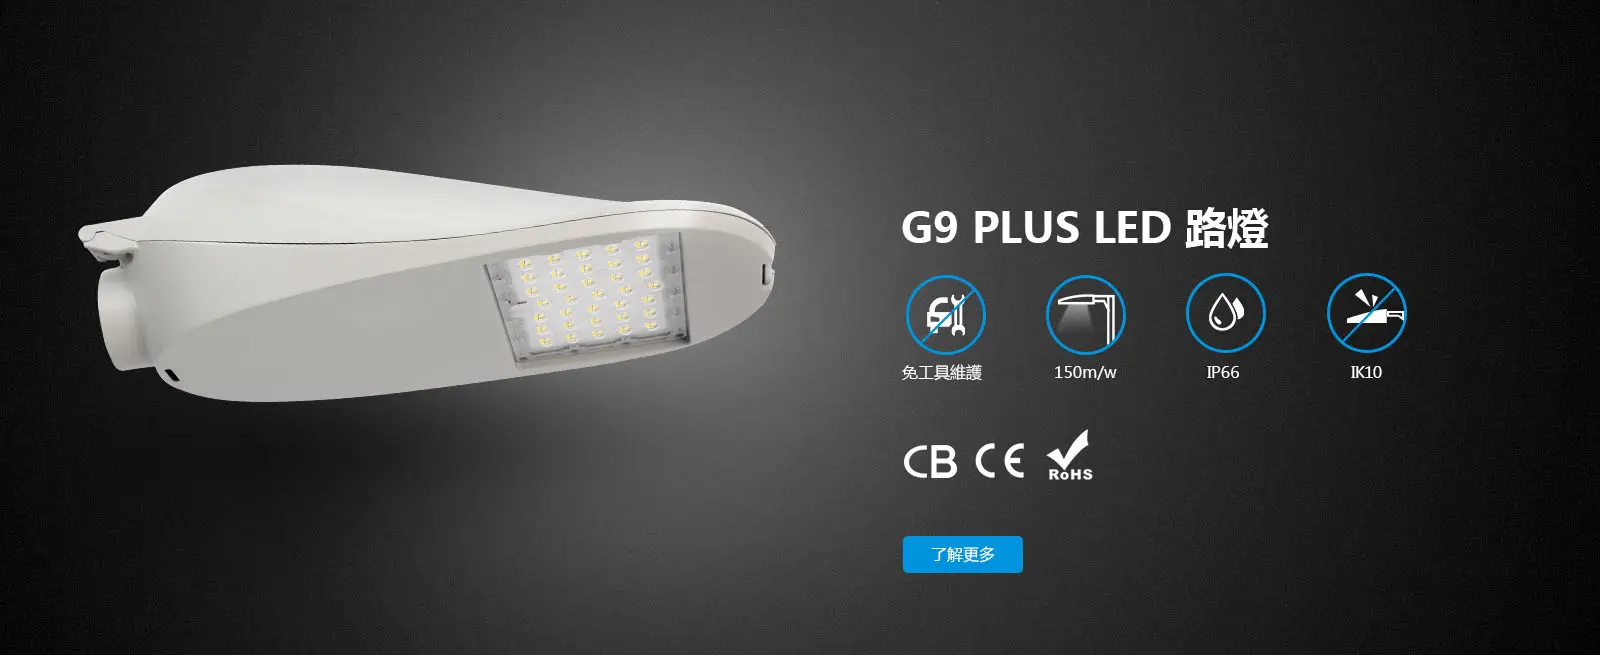 G9 Plus LED 路燈